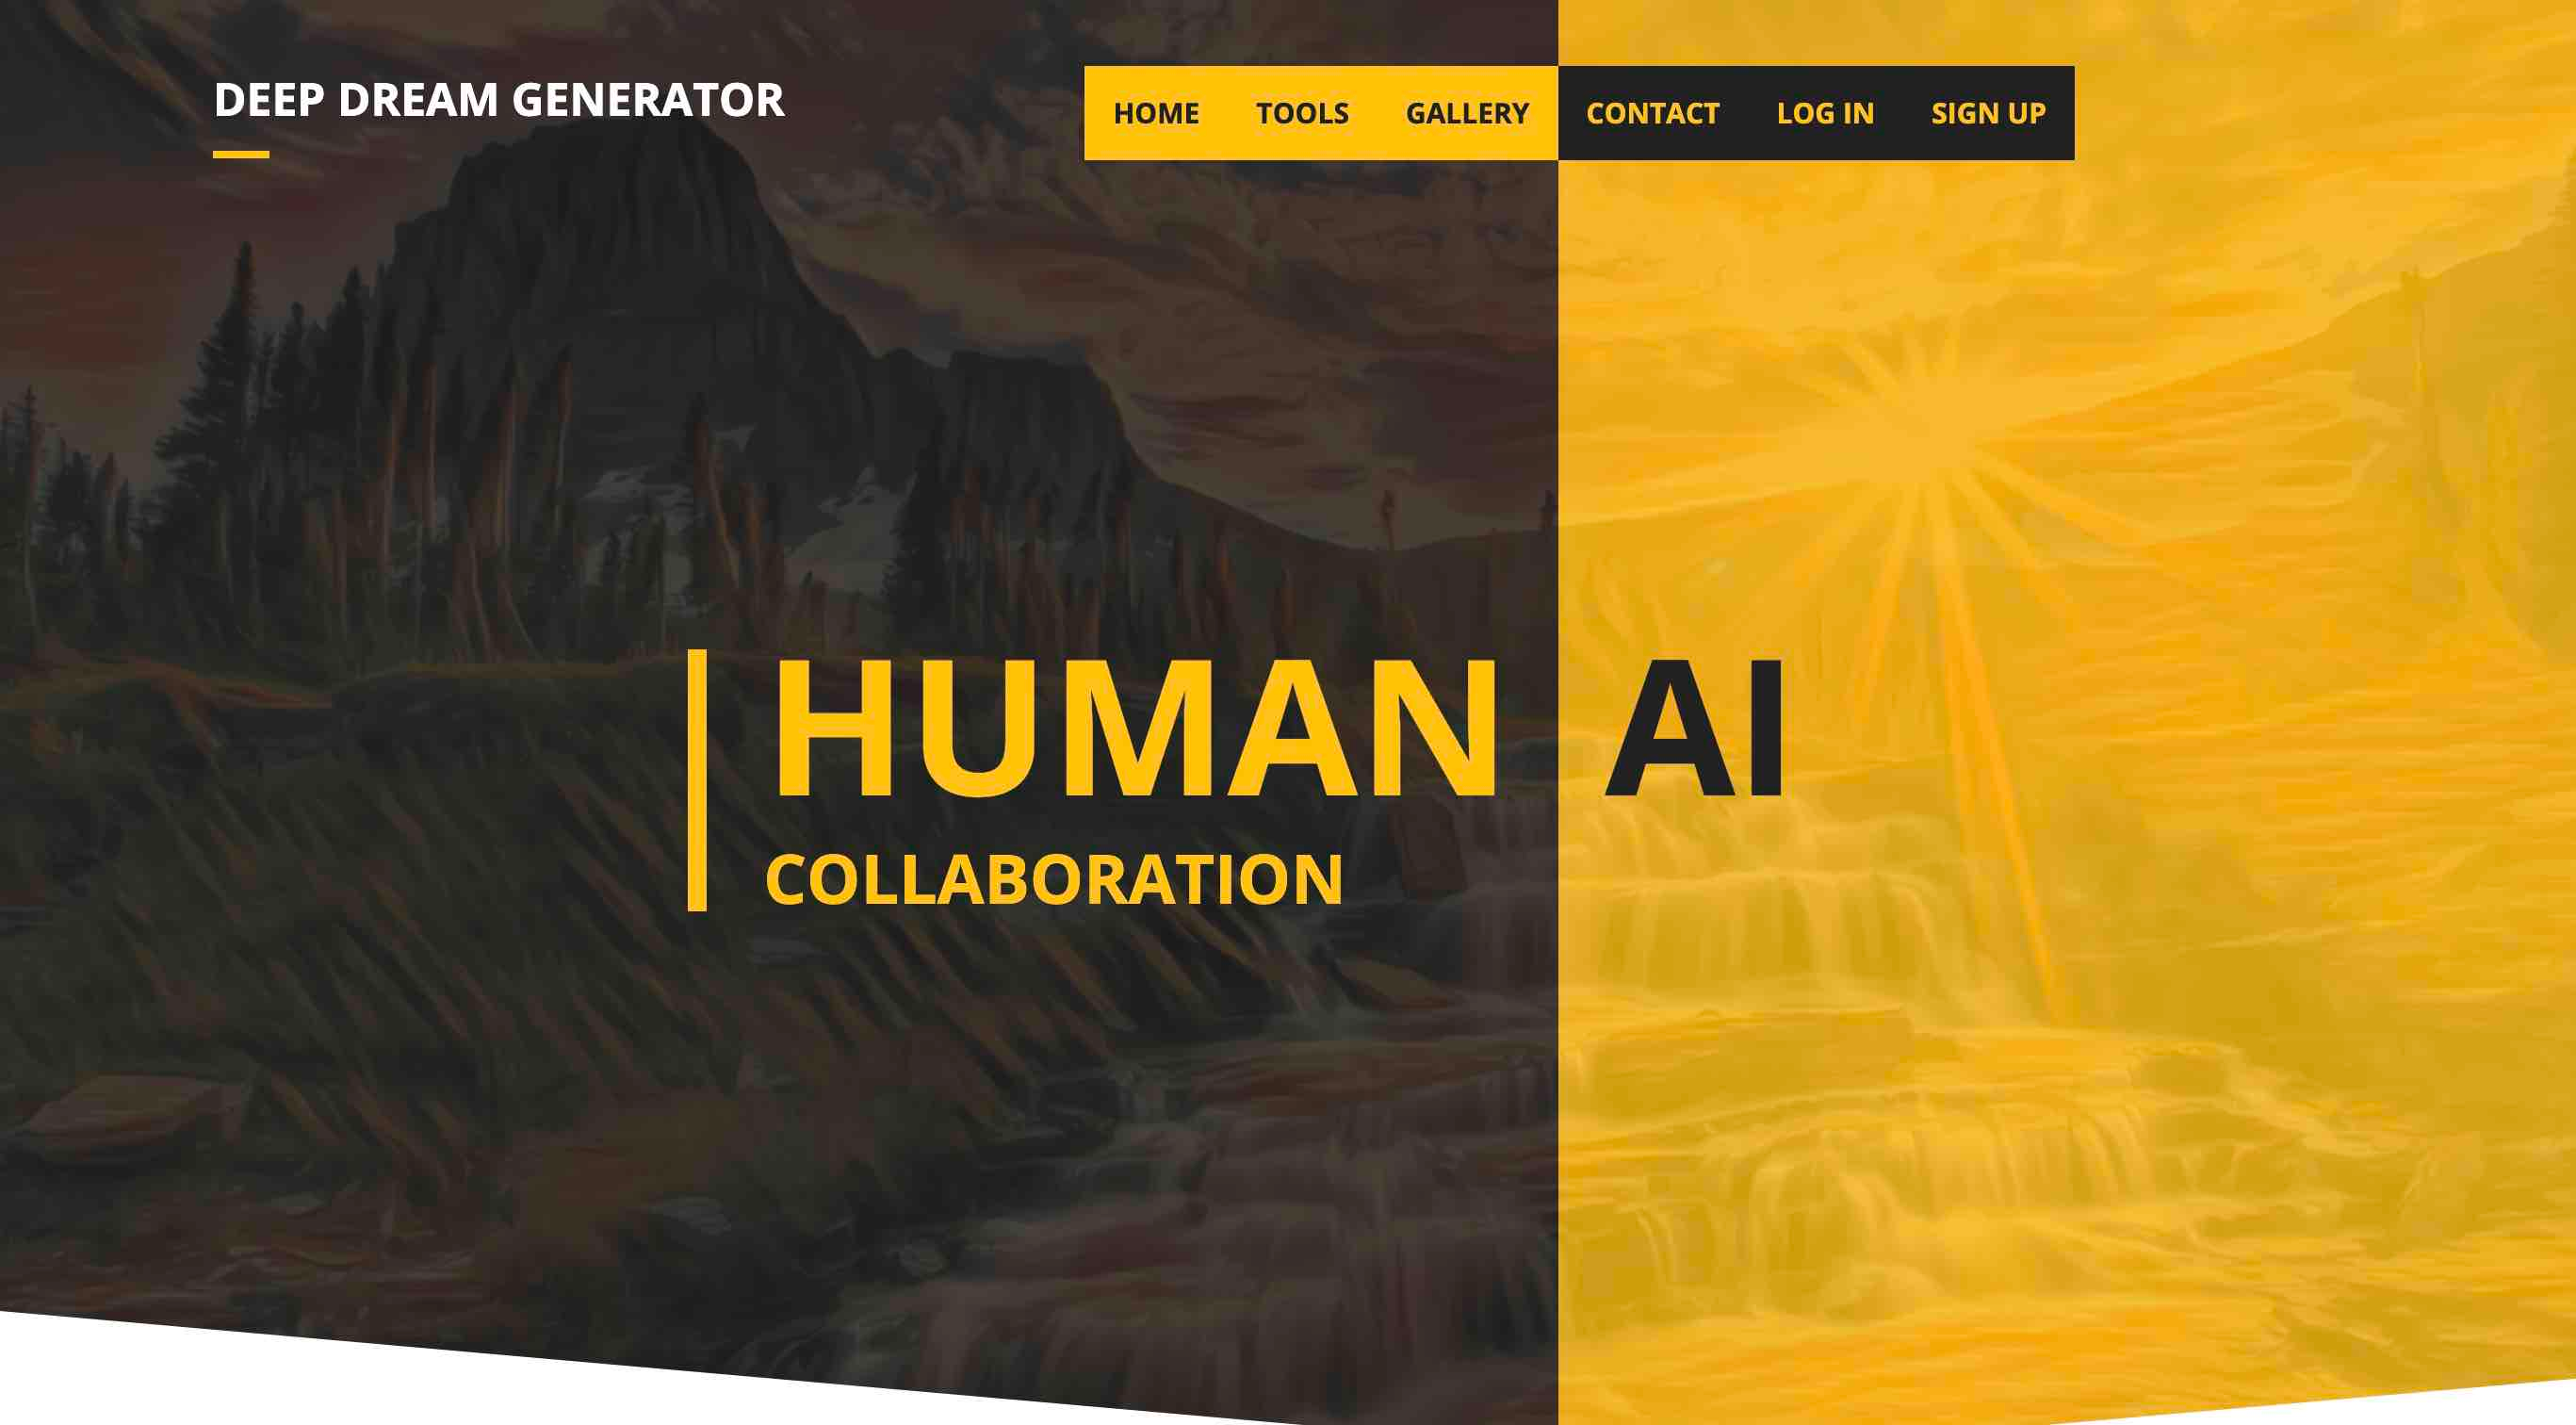 Deep dream generator AI homepage